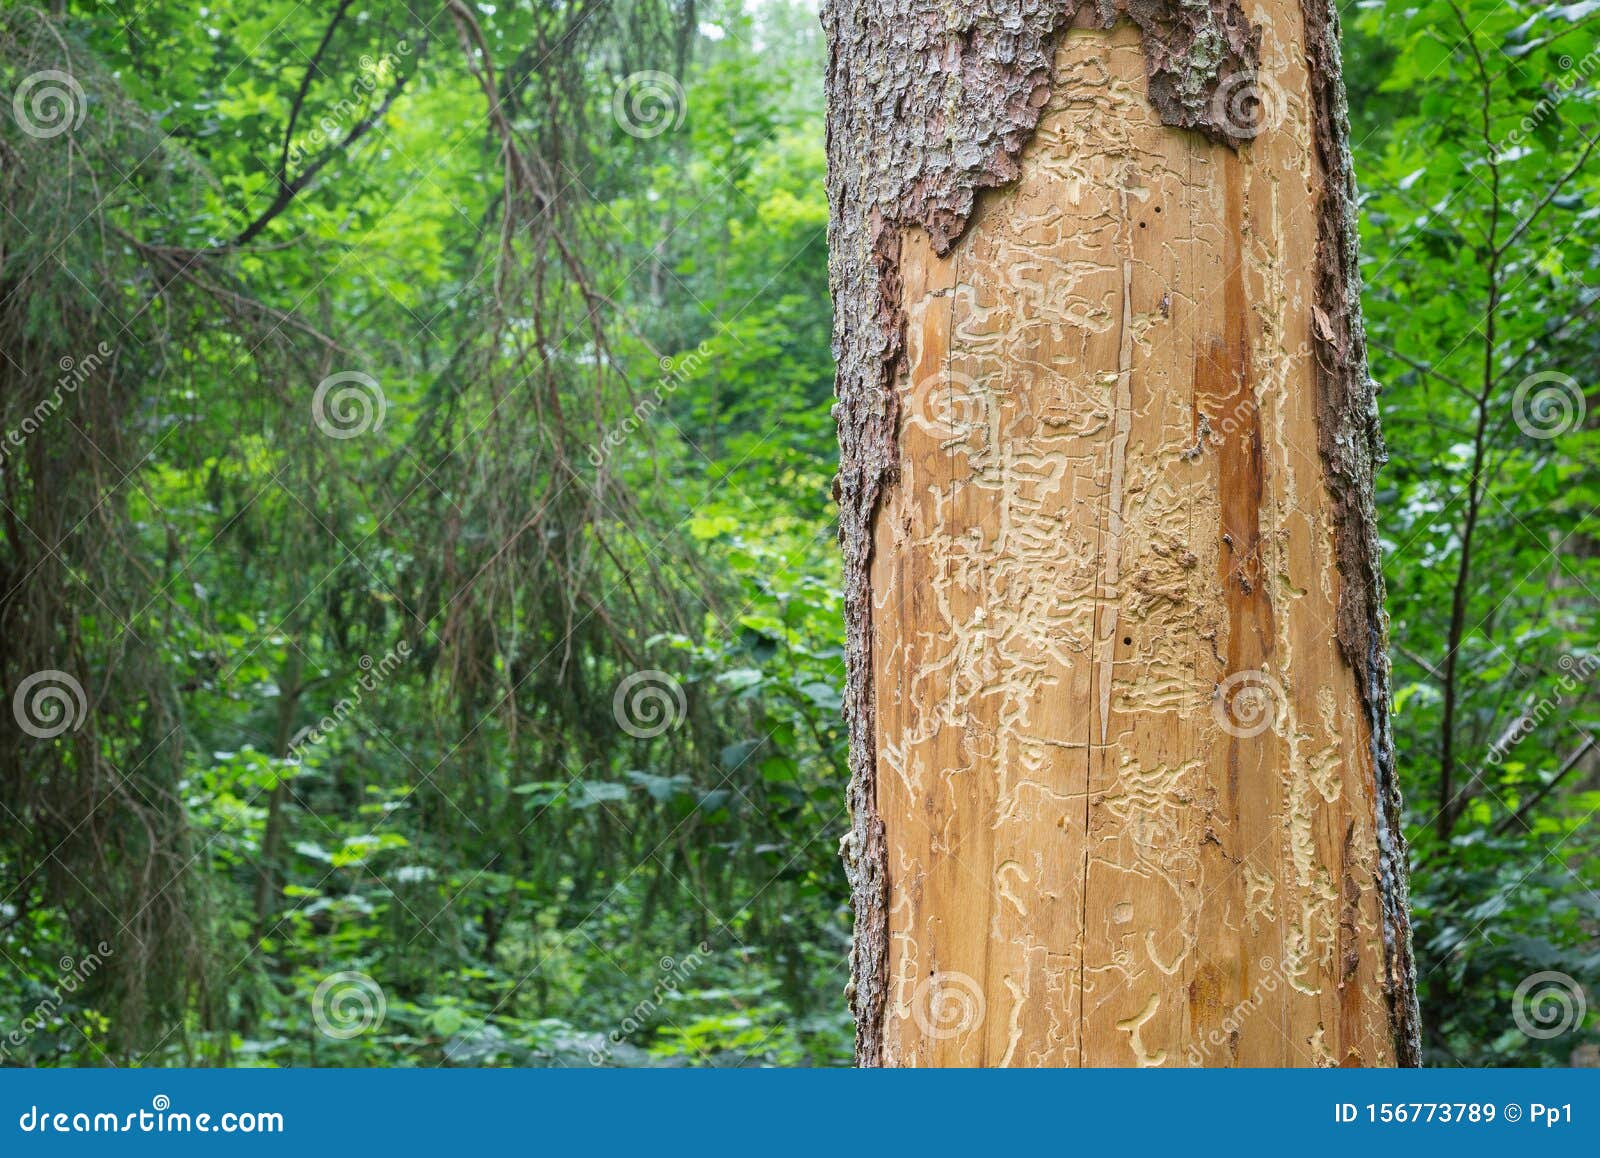 Spruce Pine Tree Bark Beetle Infection Bark Close-up Stock Image ...